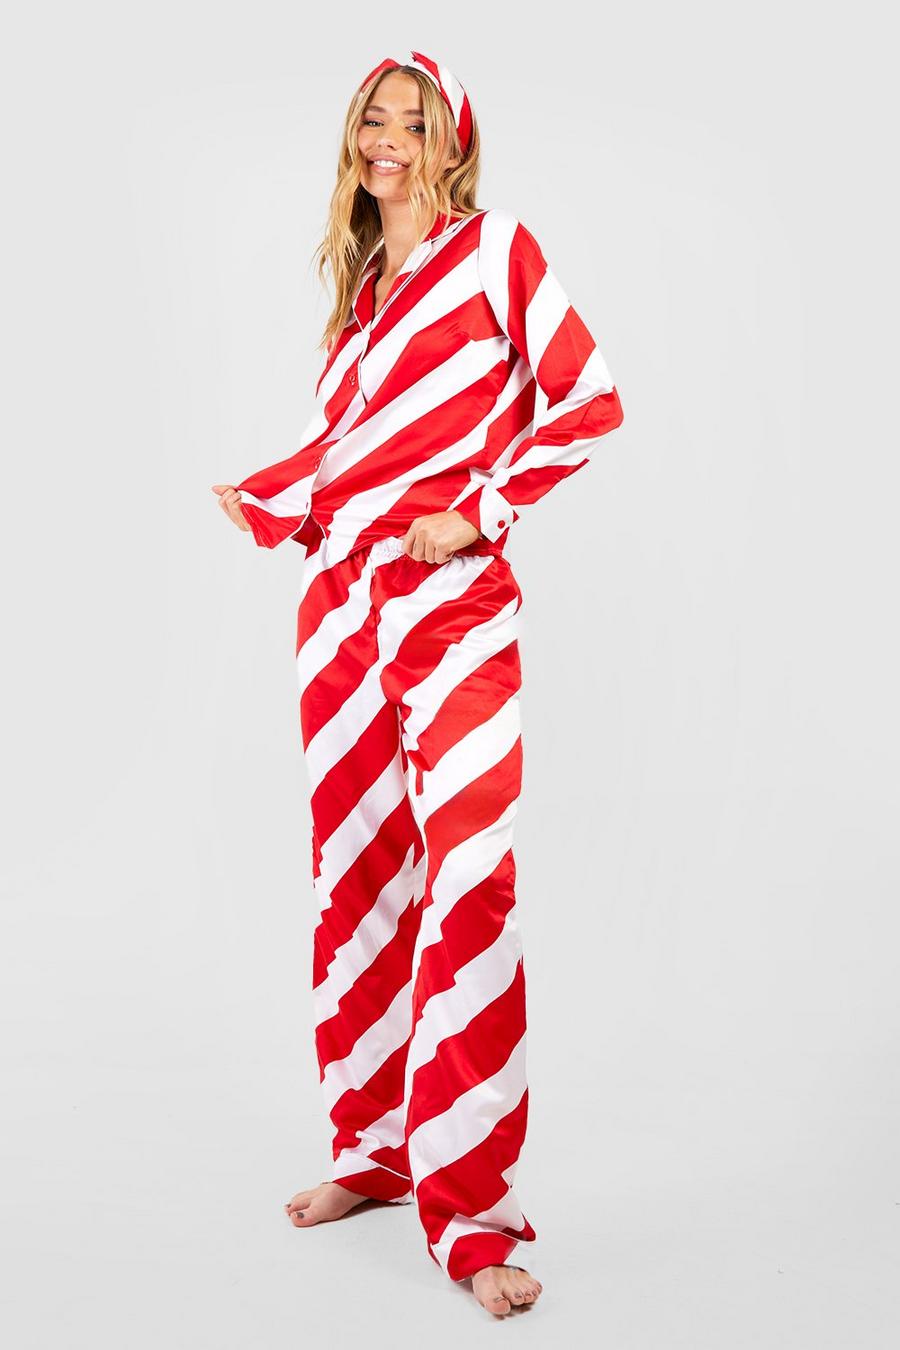 Set pigiama in raso a righe verticali & fascia per capelli, Rosso